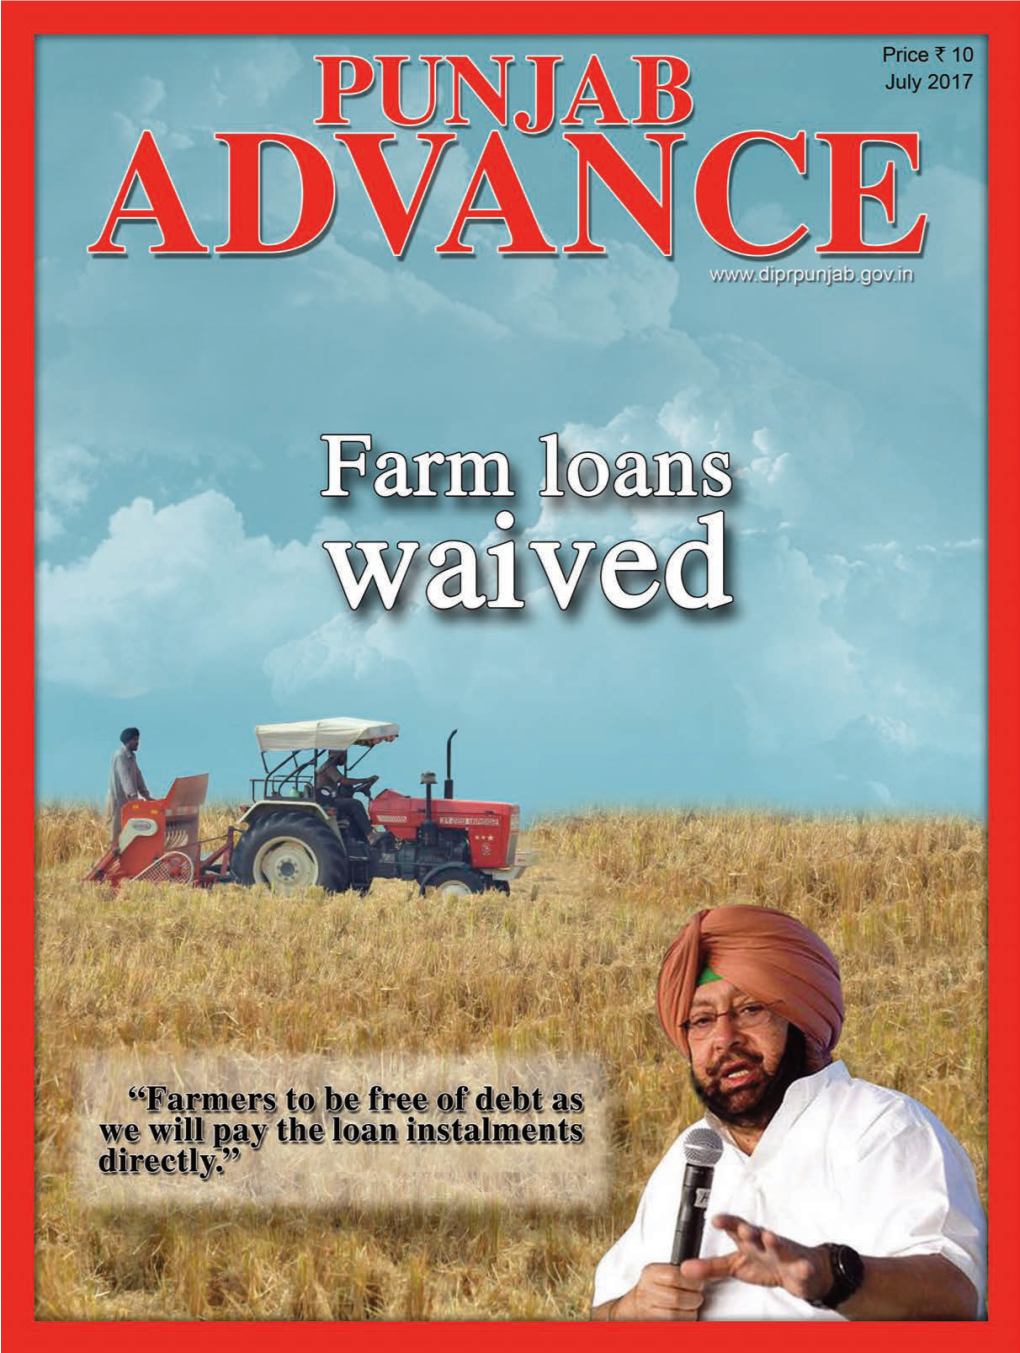 Punjab Advance August 2016 Editorial